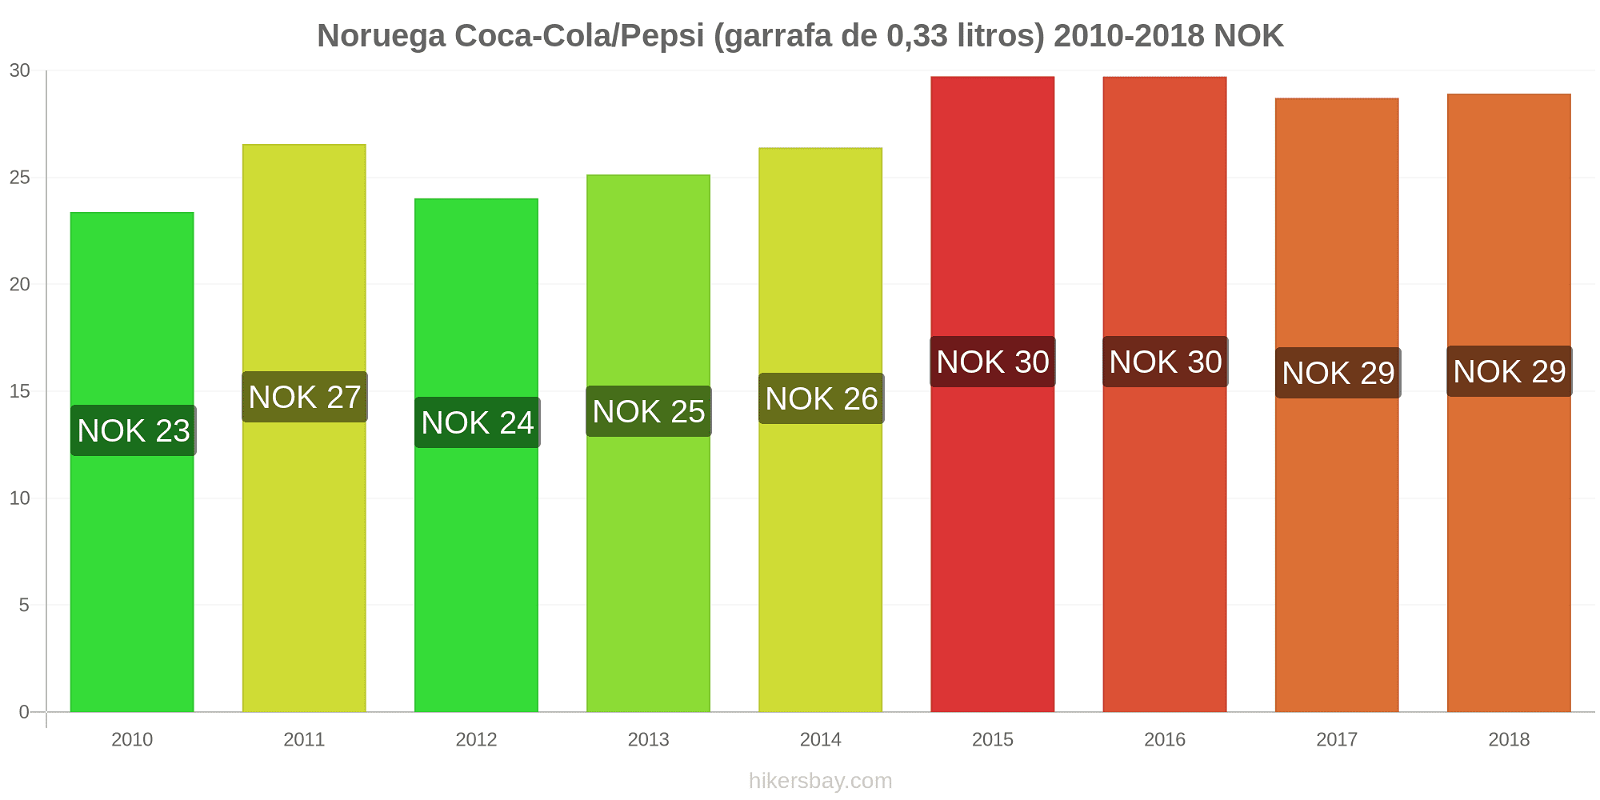 Noruega mudanças de preços Coca-Cola/Pepsi (garrafa de 0.33 litros) hikersbay.com